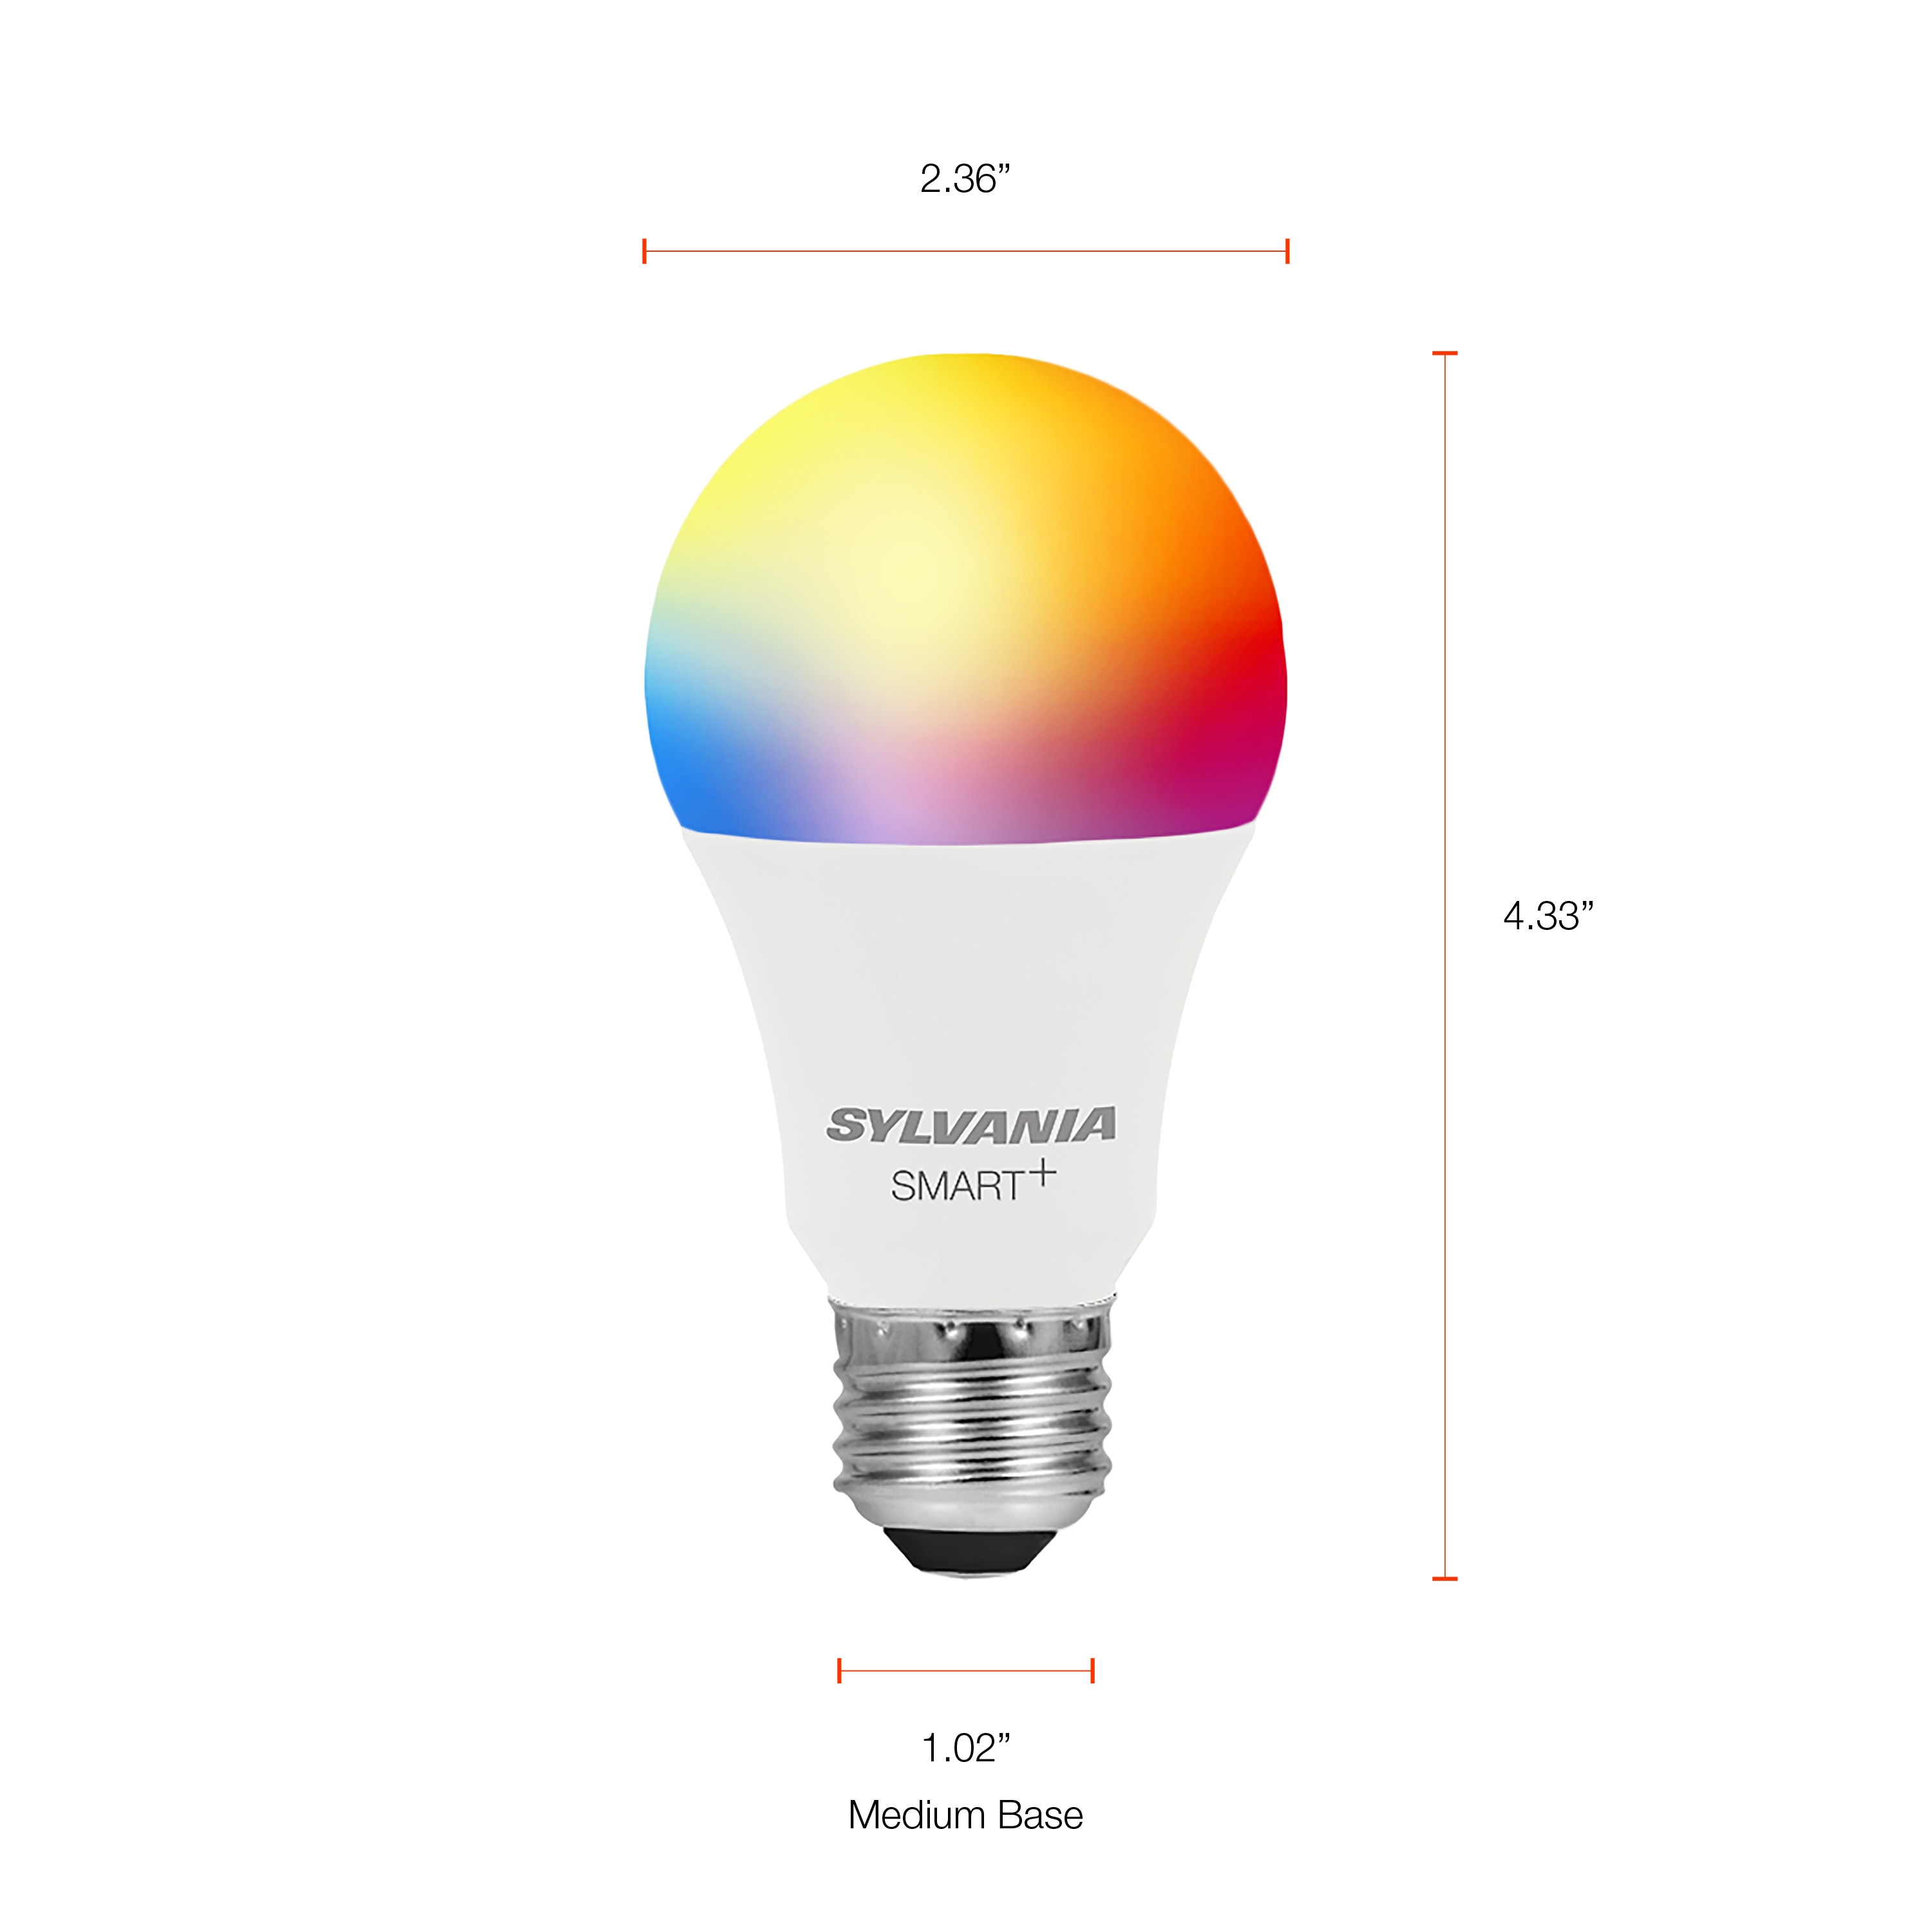 SYLVANIA Wifi LED Smart Light Bulb, 60W Equivalent Full Color and